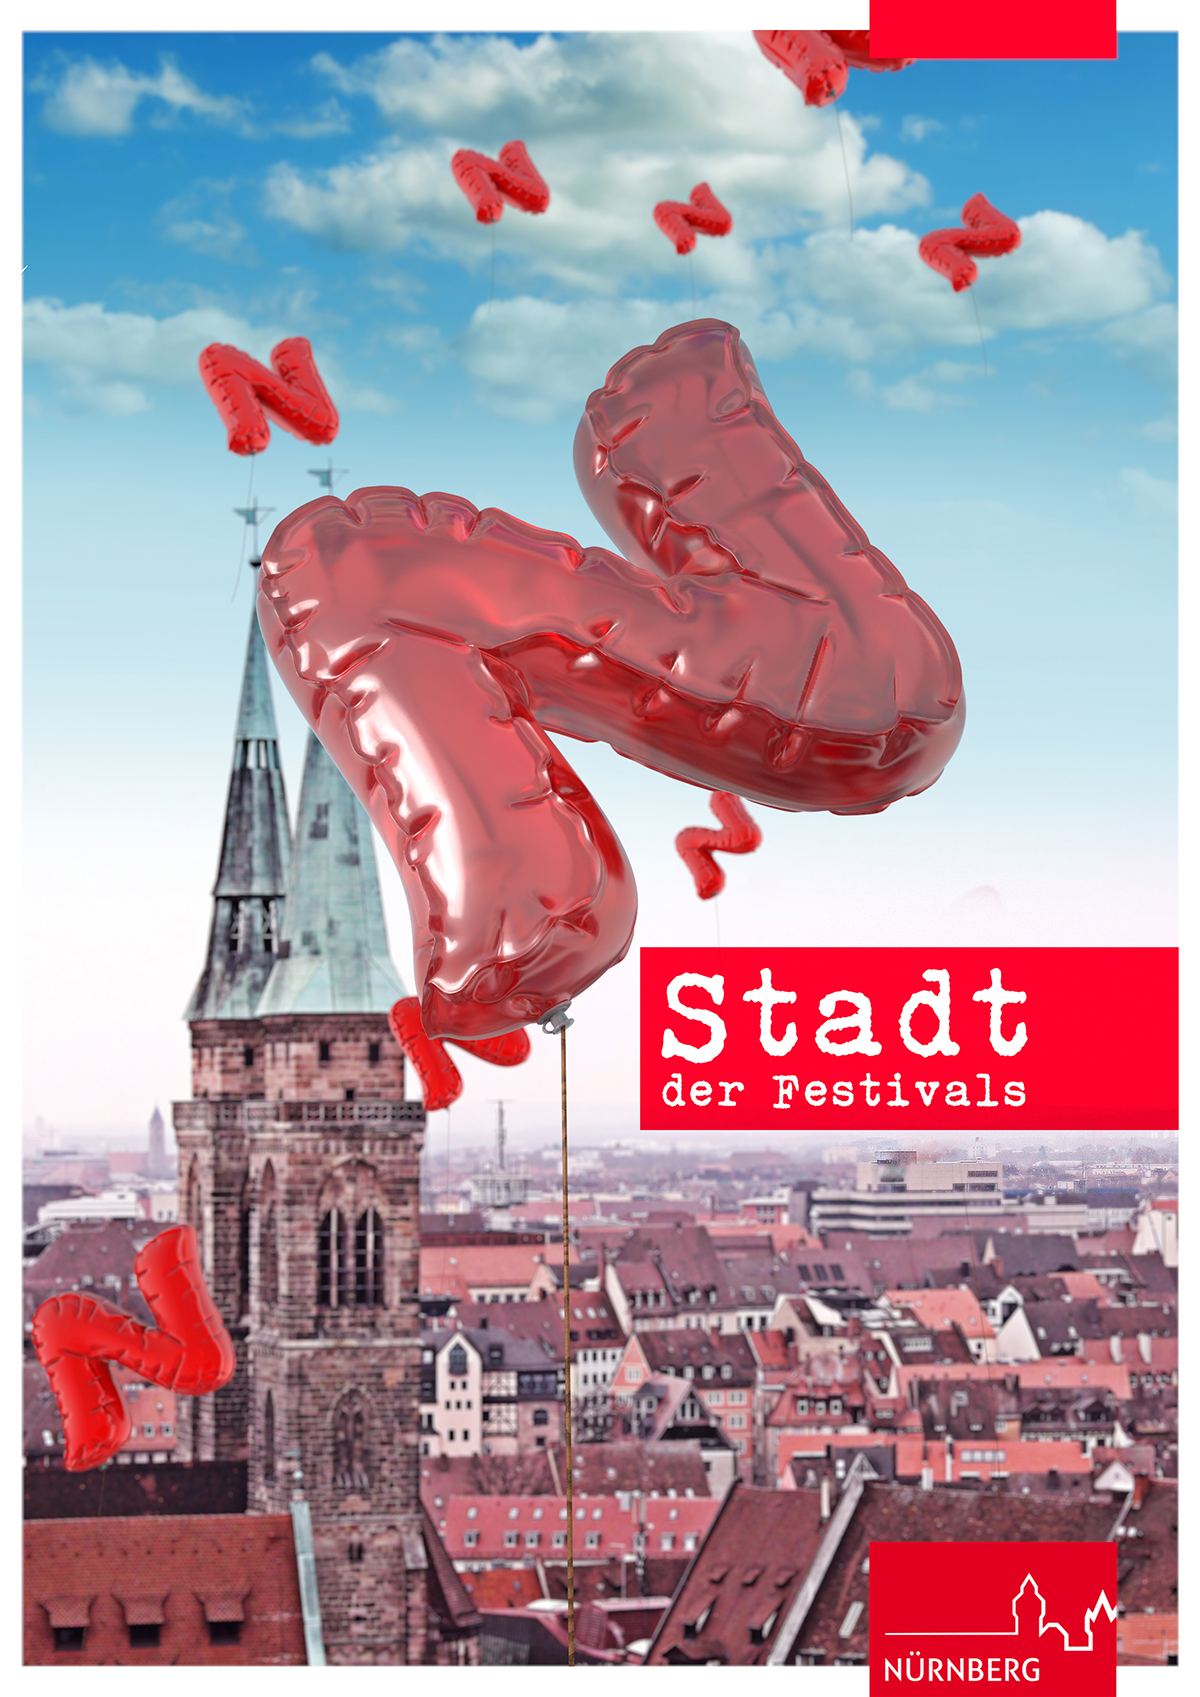 Nuremberg city stadt Nürnberg 3D poster